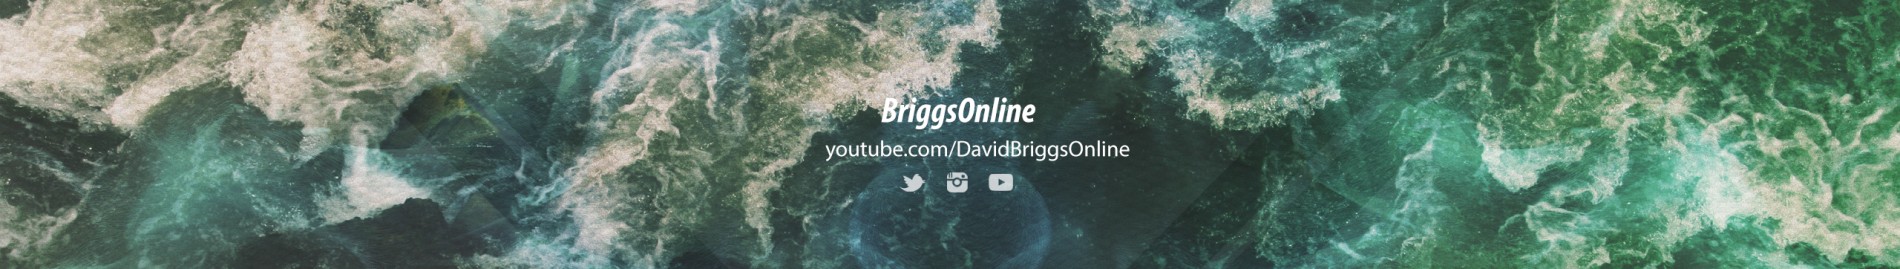 DavidBriggs